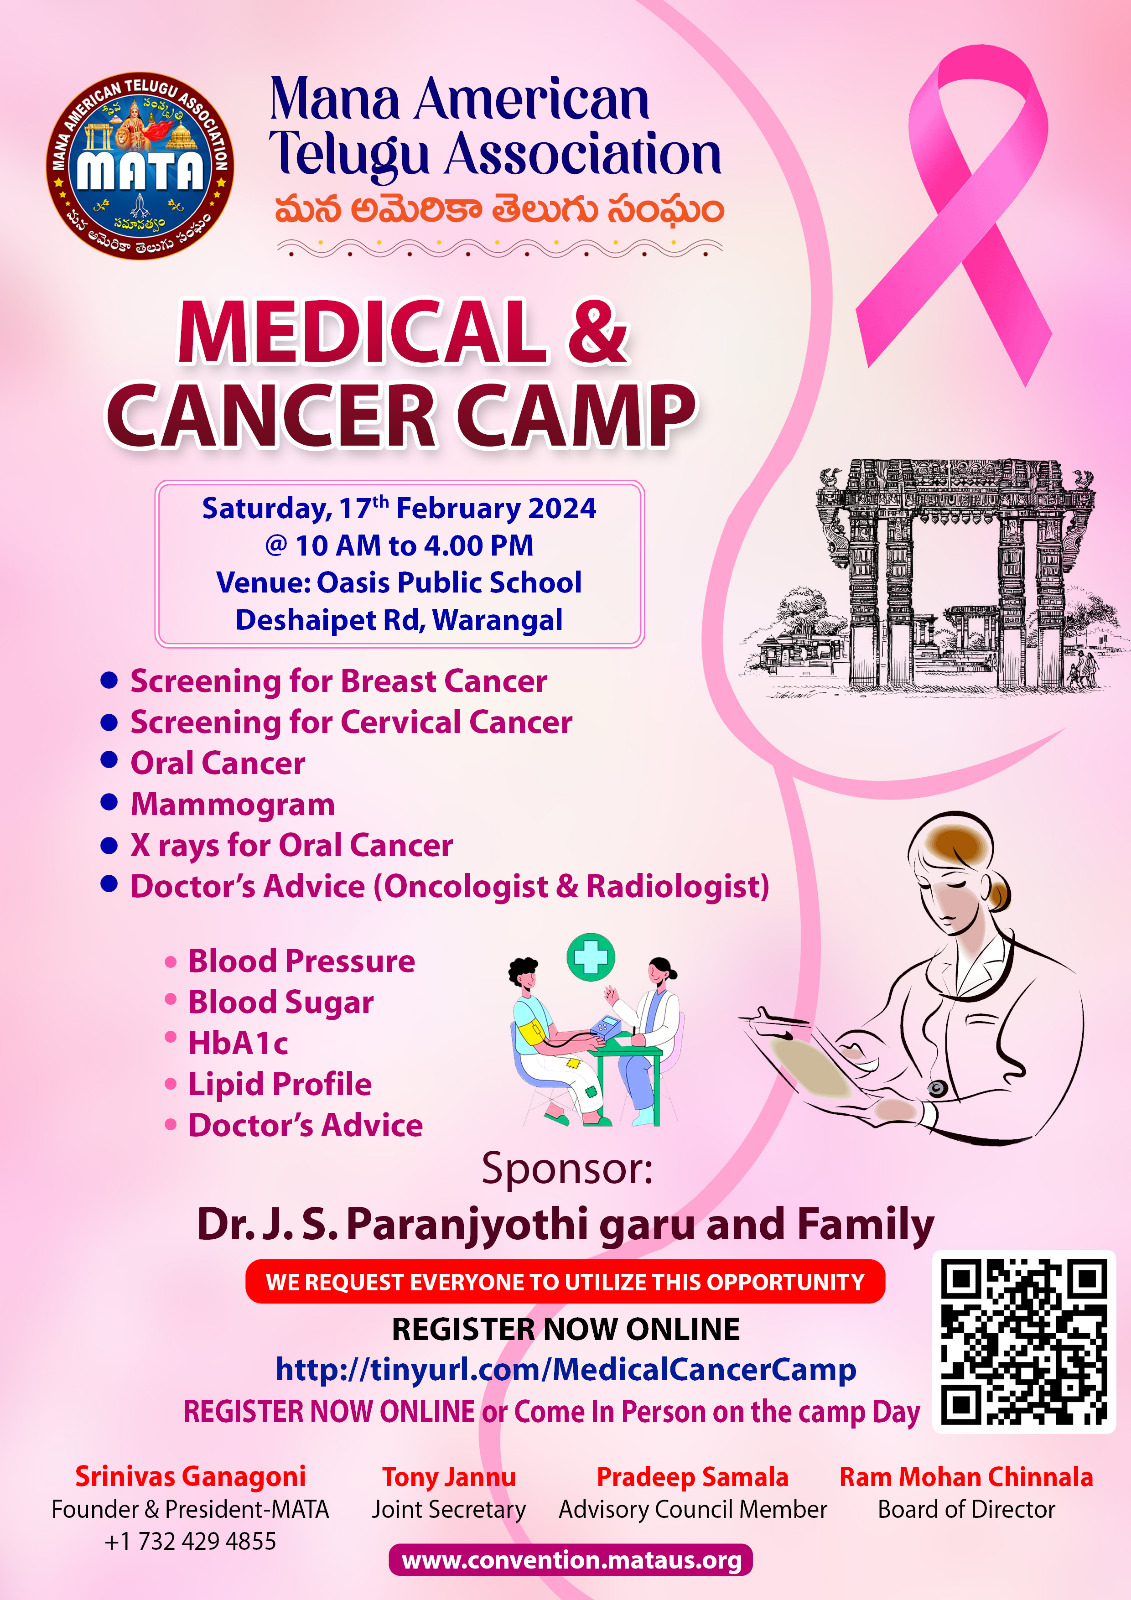 MATA-Medical & Cancer Camp in Warangal